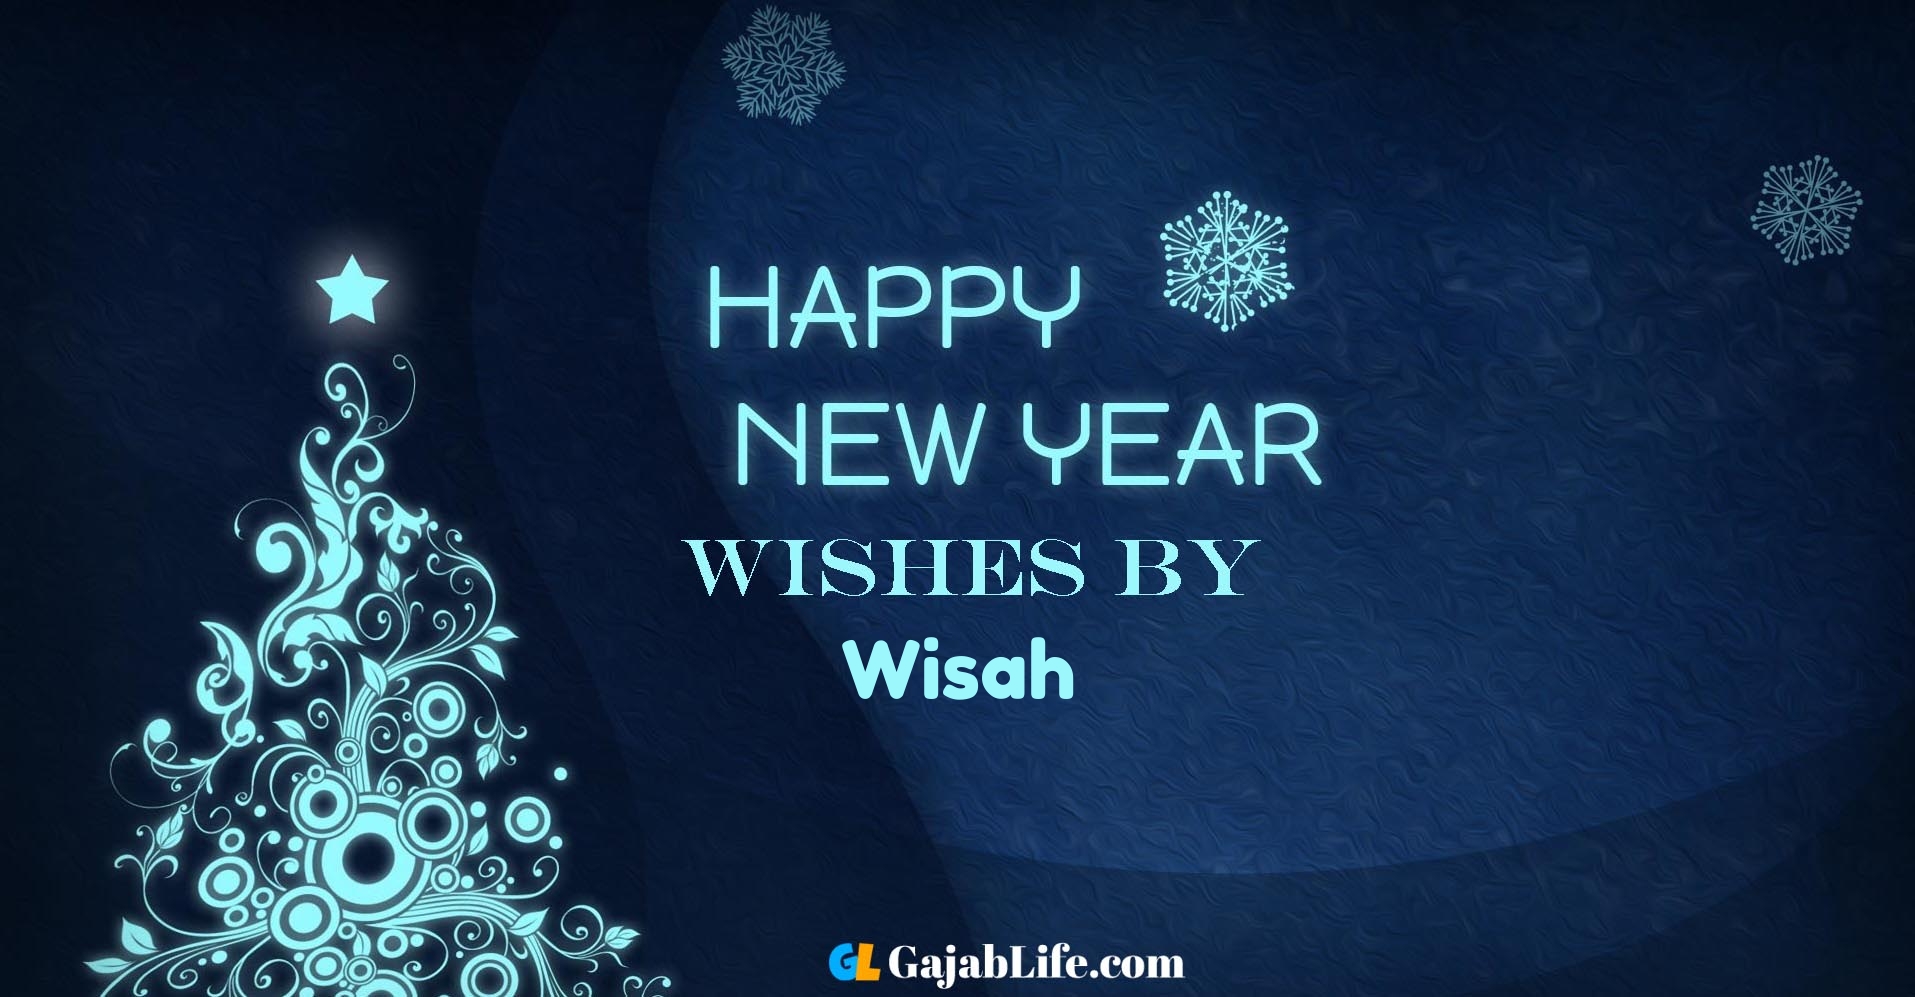 Happy new year wishes wisah